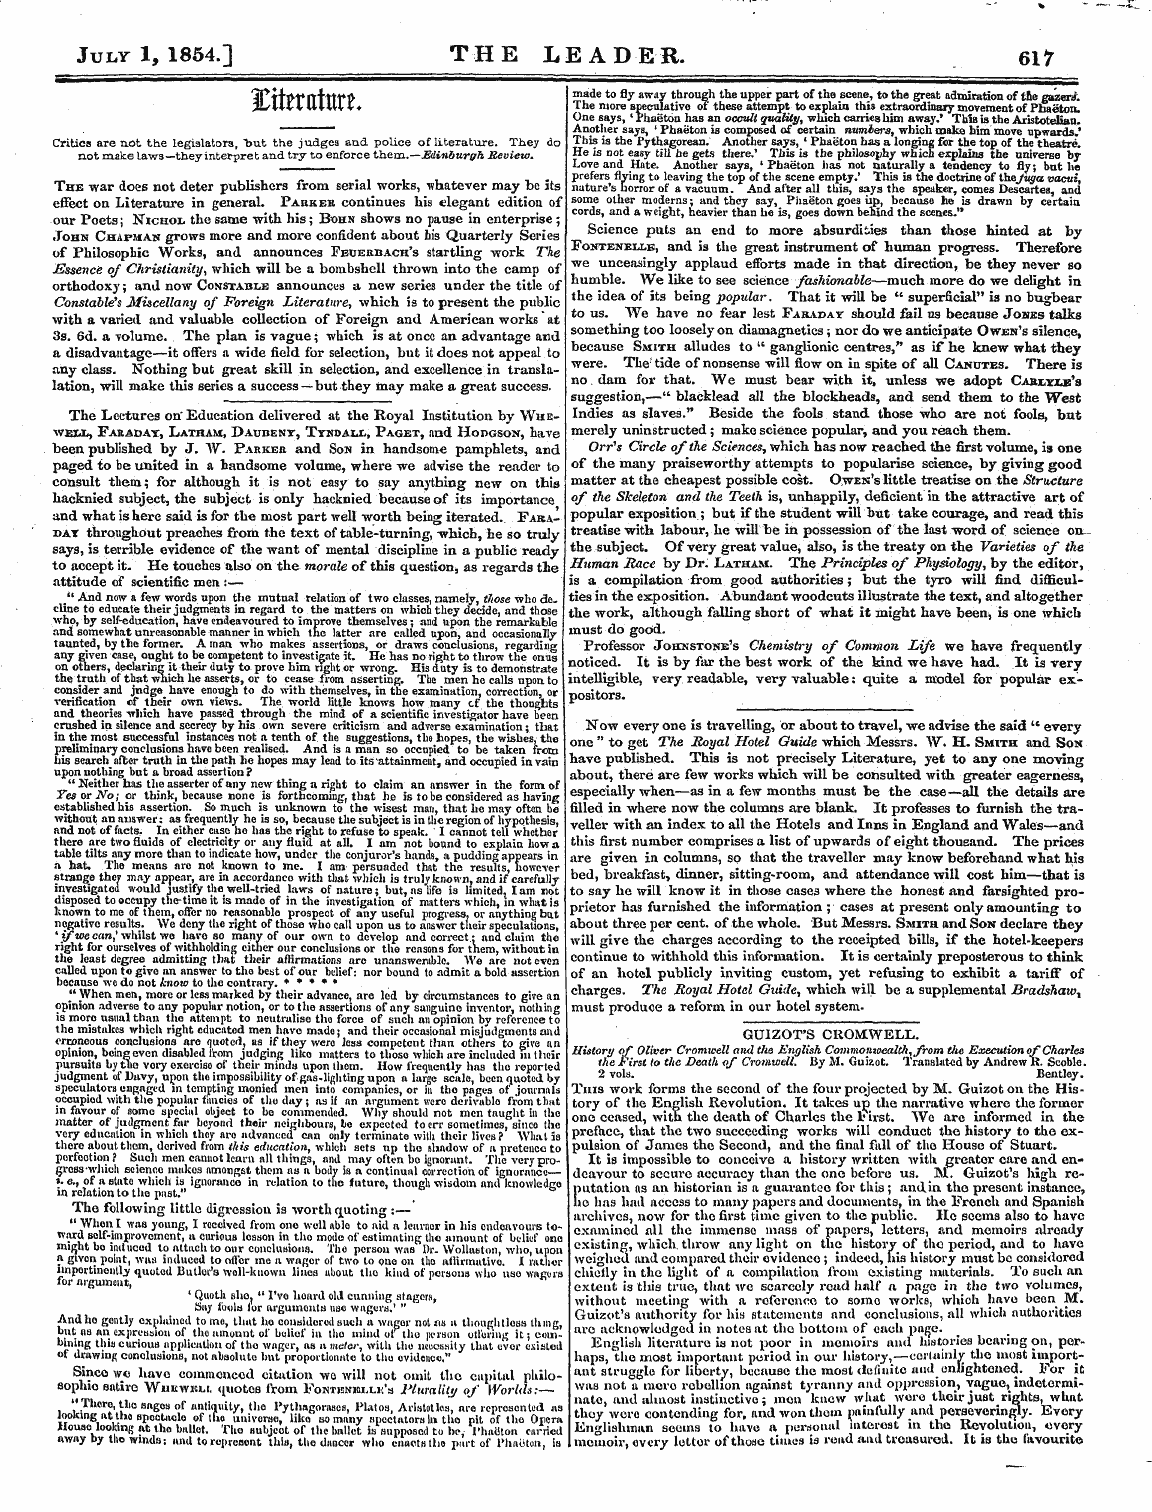 Leader (1850-1860): jS F Y, 2nd edition - ^P Tf Tv-T« Rff*Tfi^1&Gt; Jl'th-Tuhhv* 1